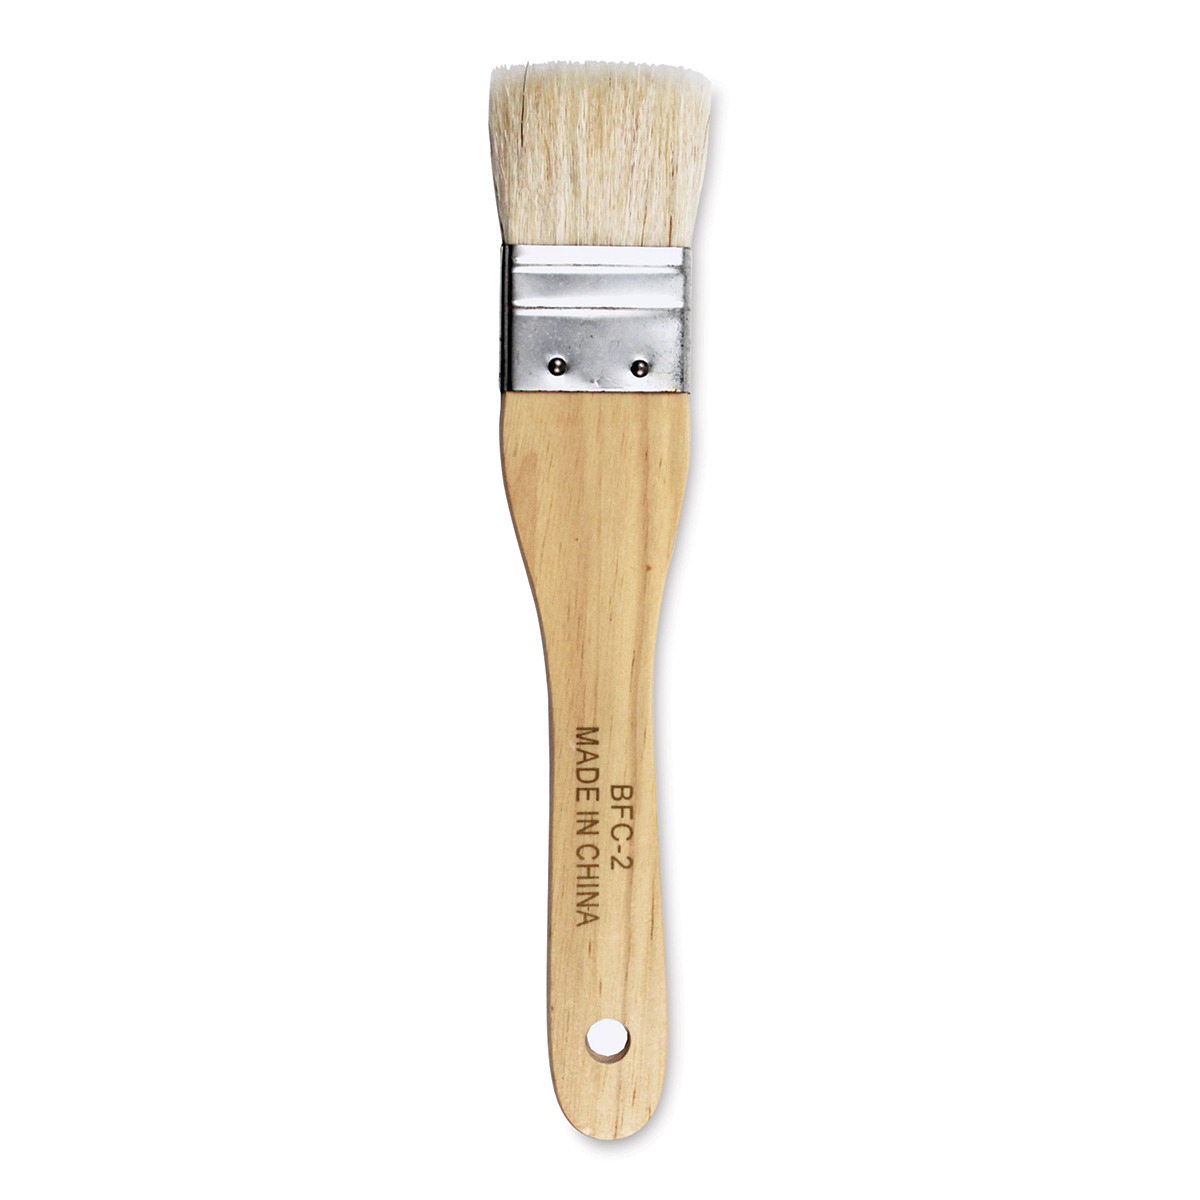 Flat Hake Brushes, Hake Paint Brush, Artist Painting Brushes, Sheep Hair  Bristles Wash Brush for Watercolor, Wash, Ceramic and Pottery Painting (4